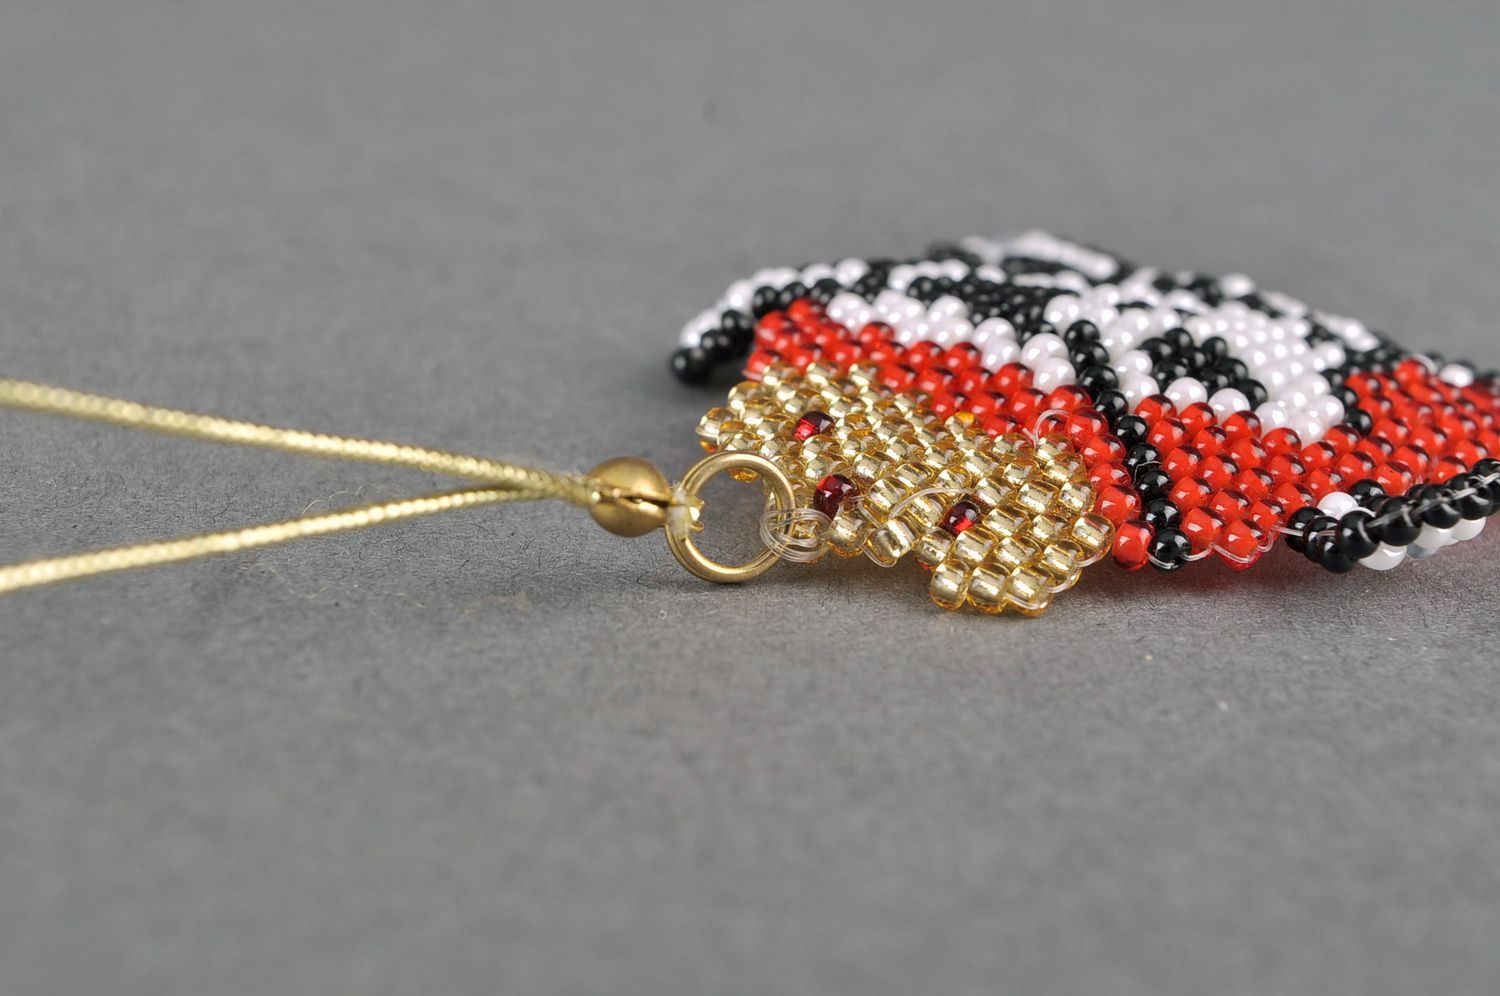 Braided keychain made of beads photo 1